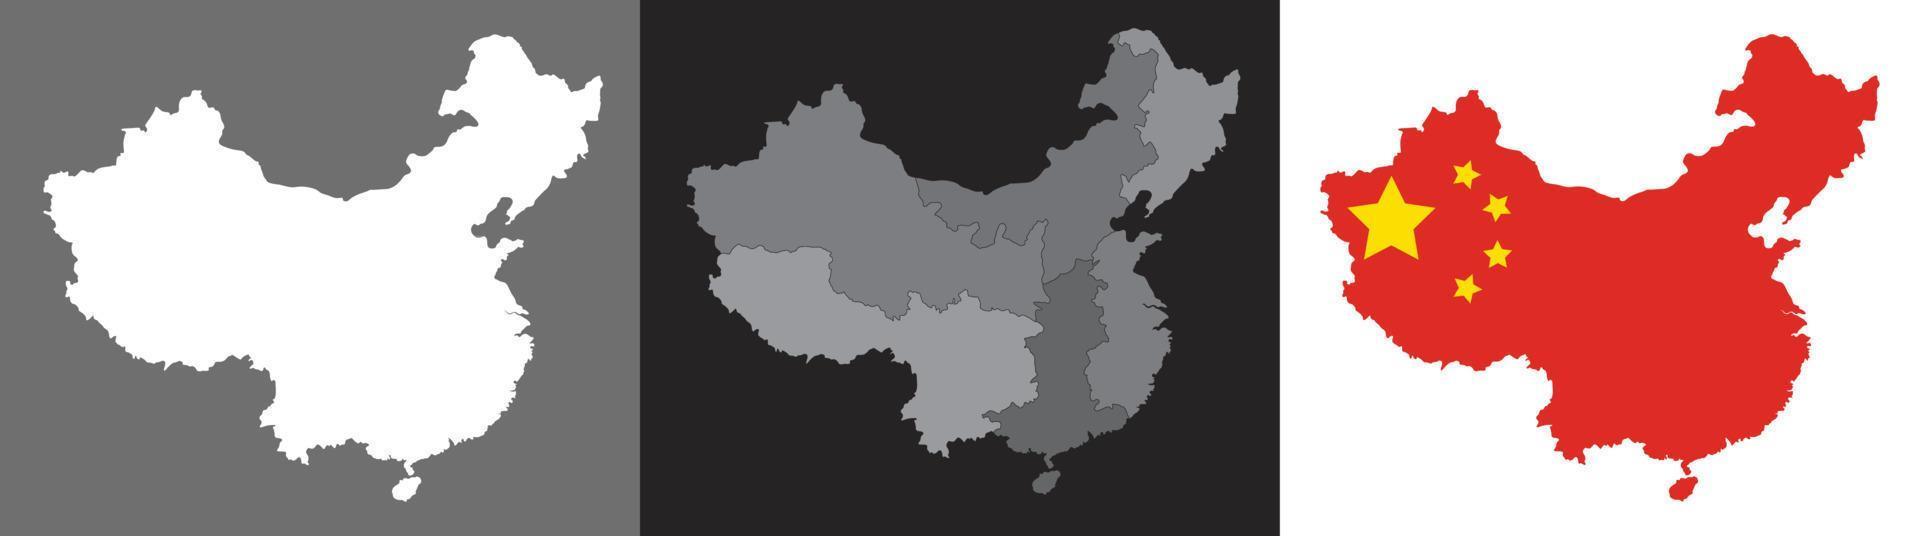 mapa da china com cinza, preto, bandeira isolada. ilustrador vetorial. vetor